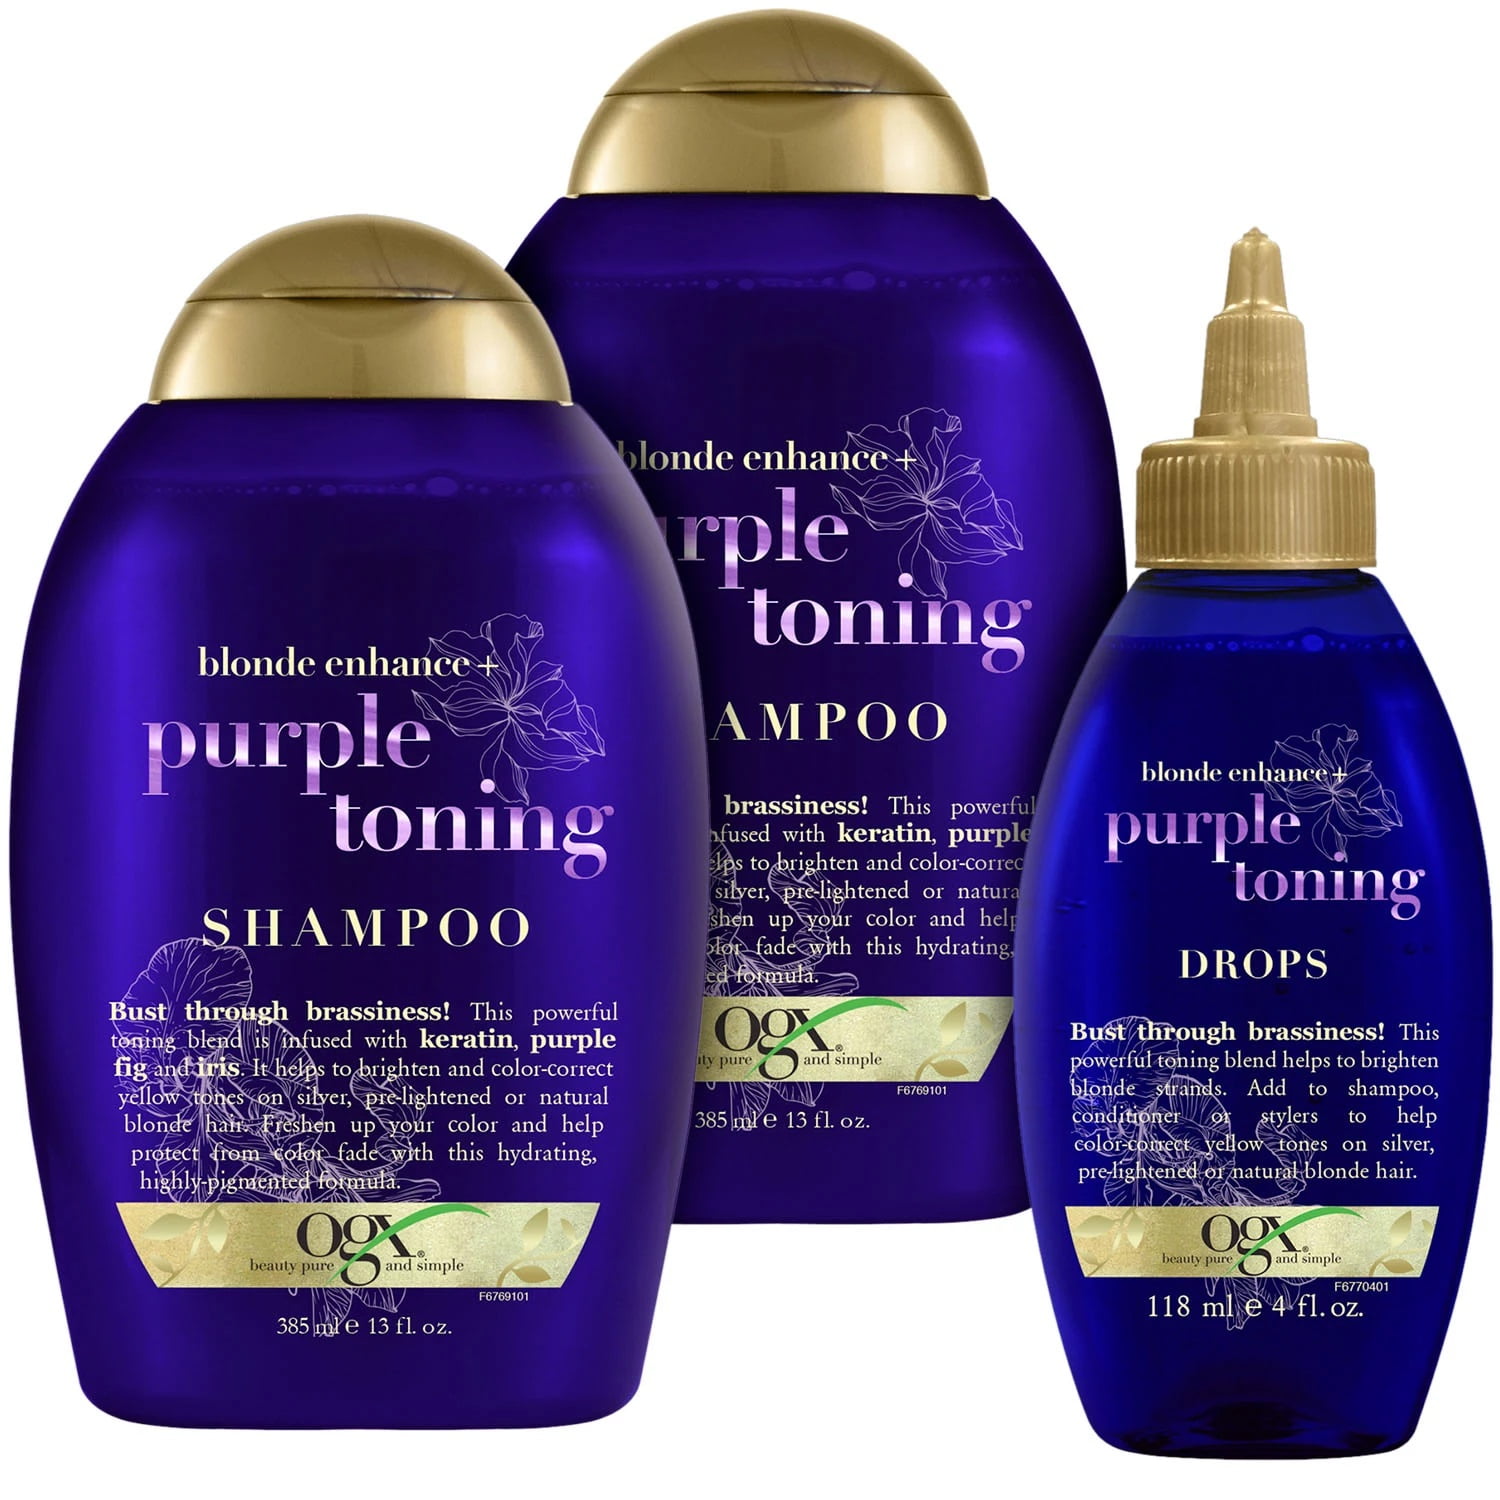 ogx-blonde-enhance-purple-toning-shampoo-and-drops-2-shampoo-1-drop